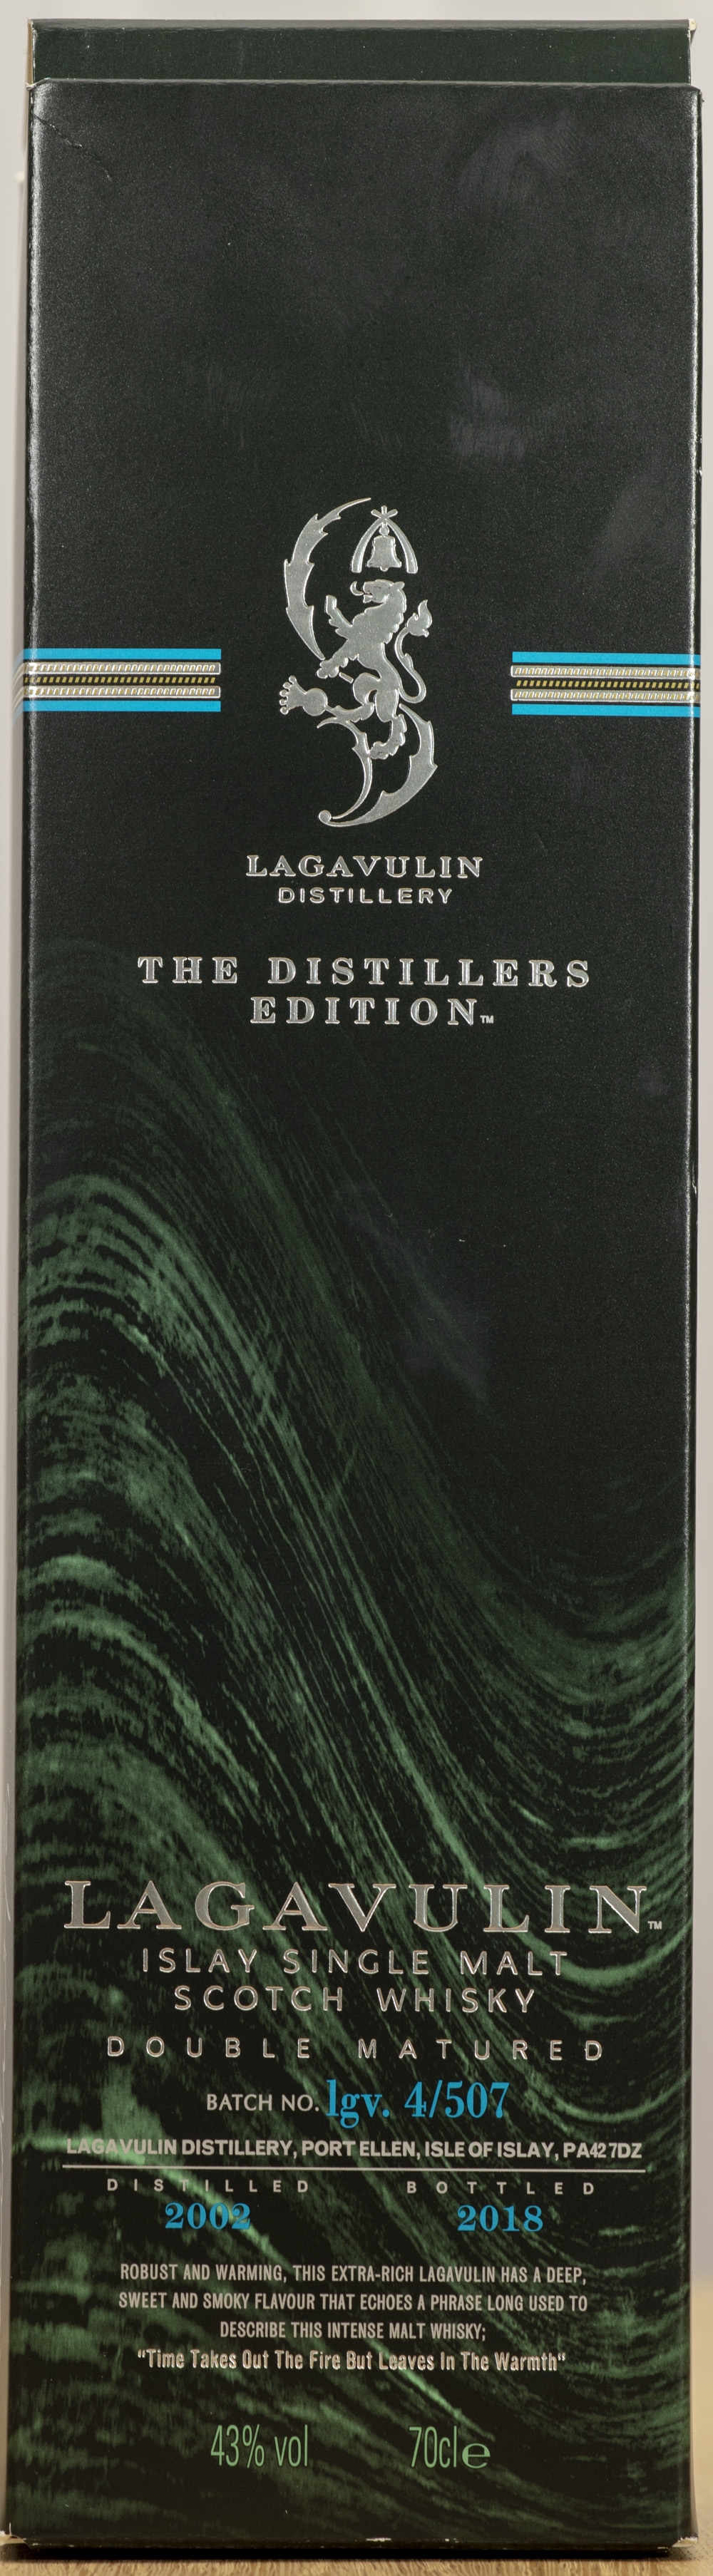 Billede: PHC_1584 - Lagavulin Distillers Edition - box front.jpg